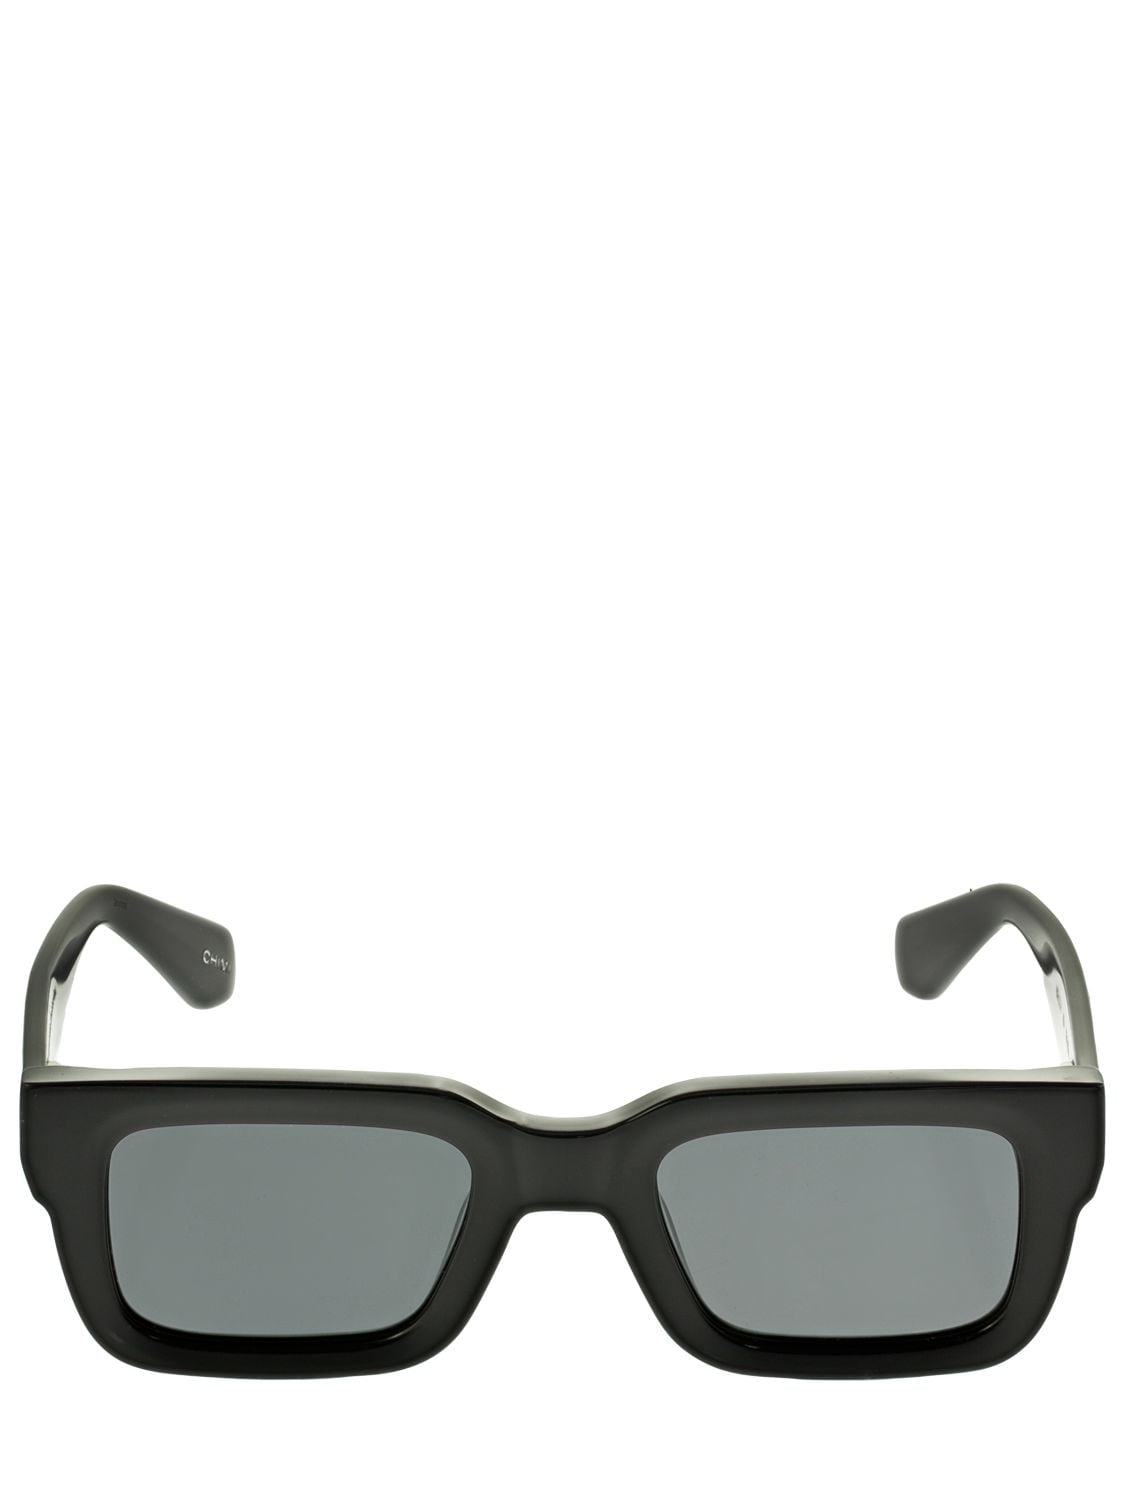 Chimi 05 Squared Acetate Sunglasses In Black